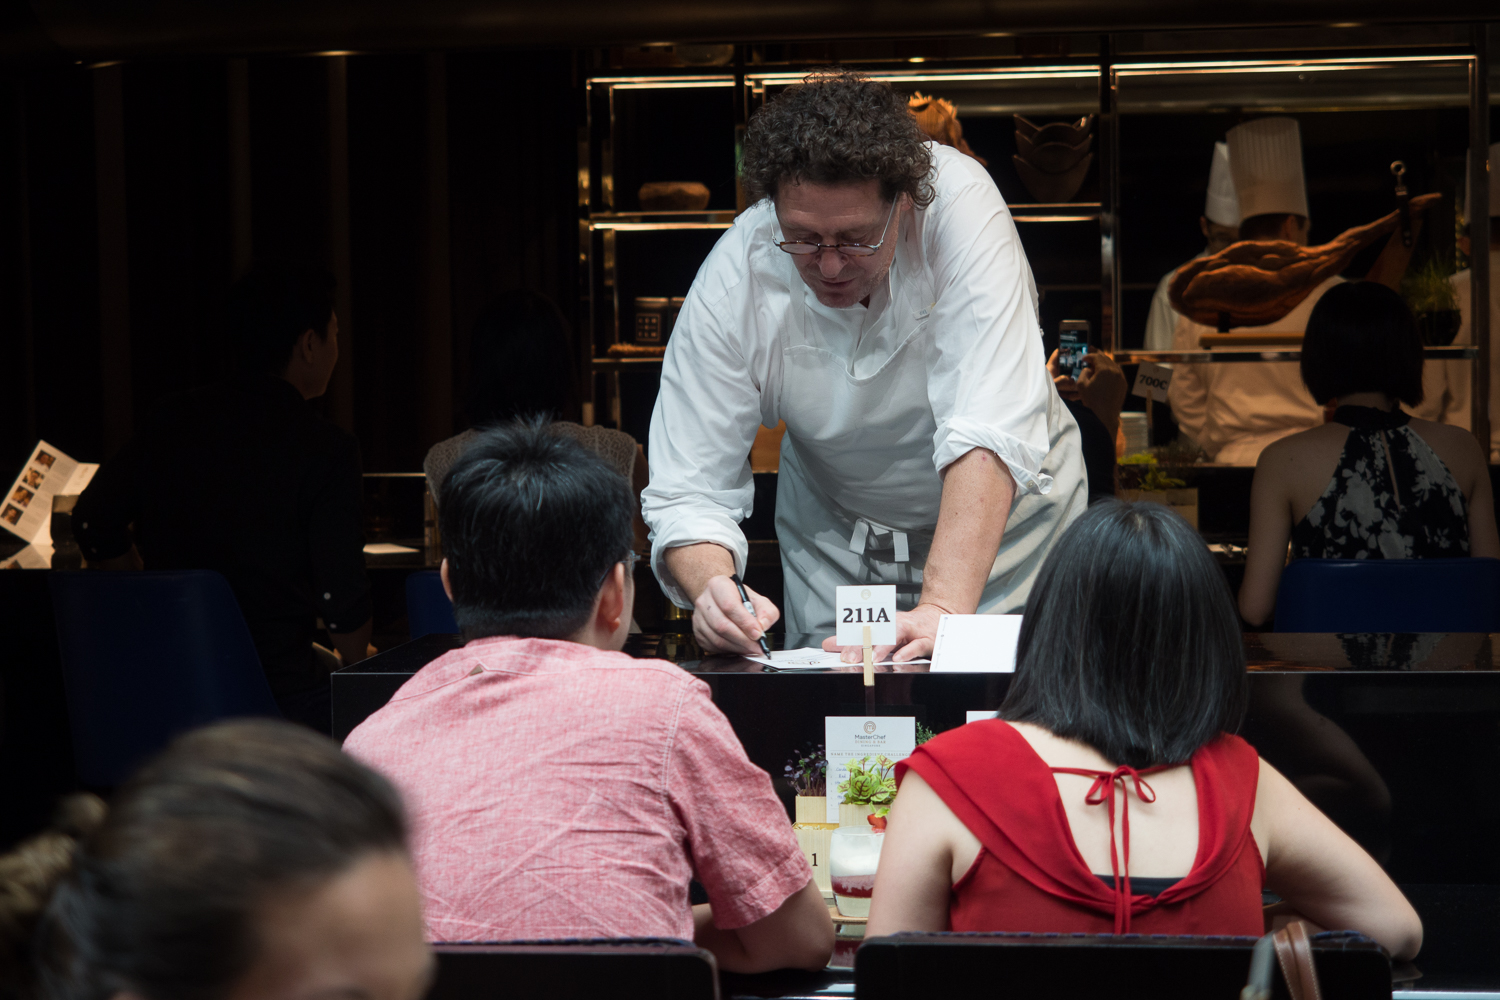 MasterChef Dining and Bar Singapore 2016